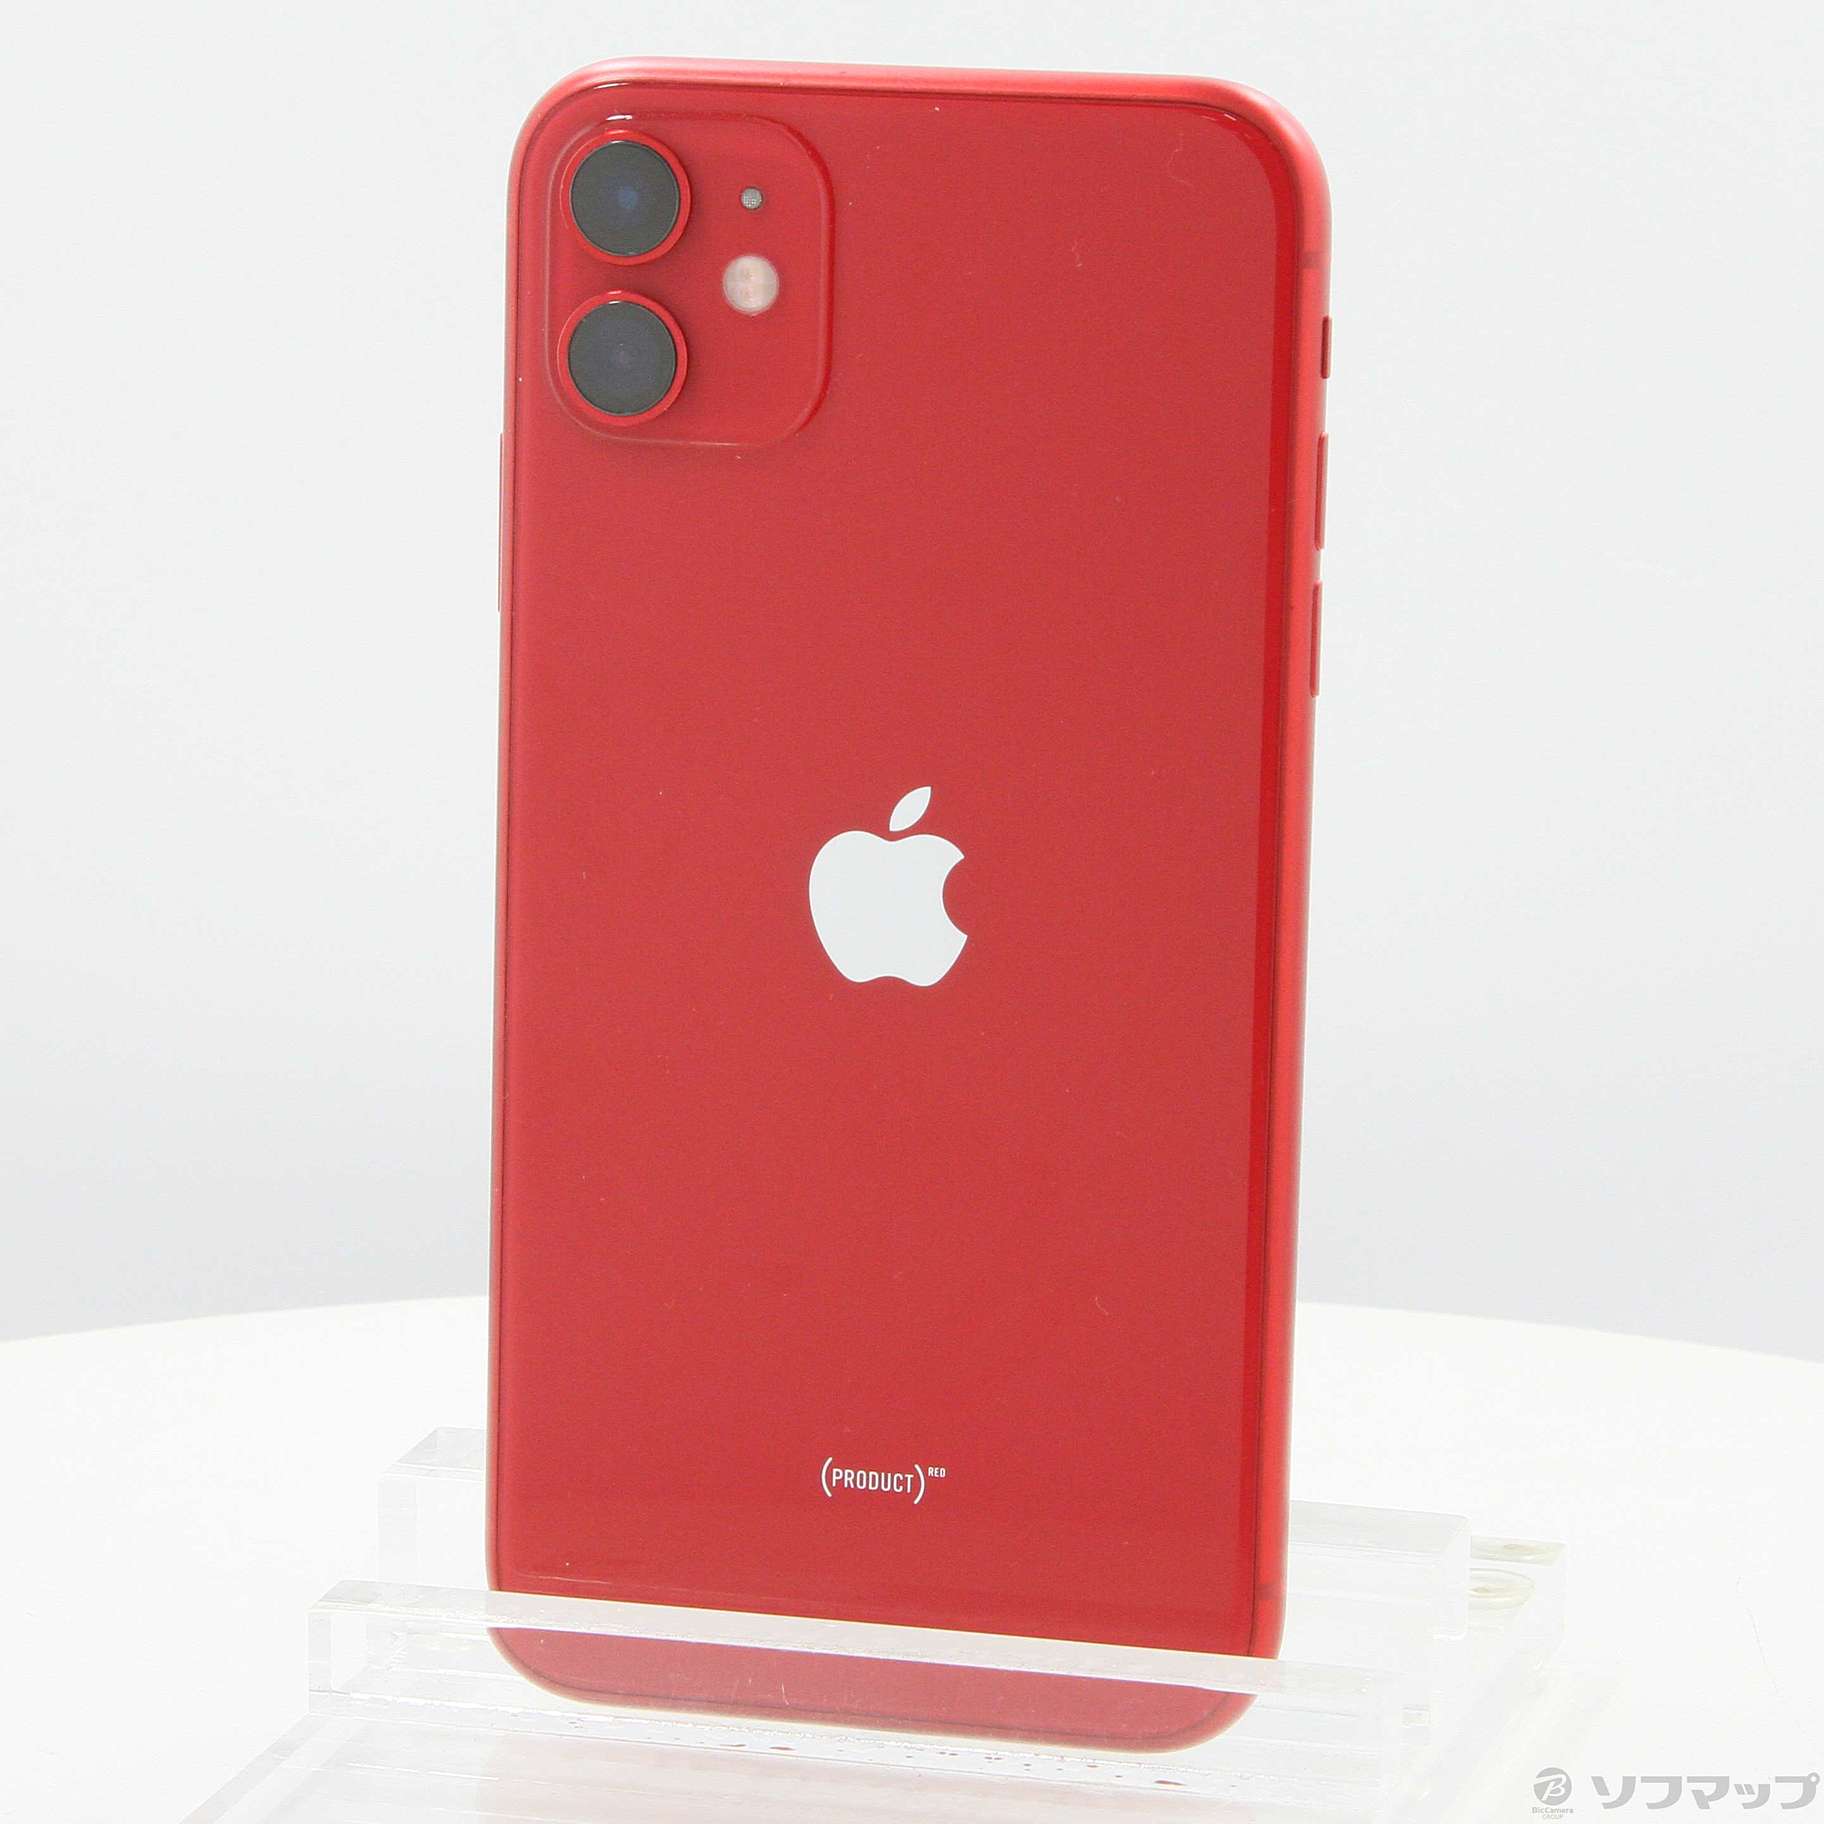 iPhone11 red 256 simフリー